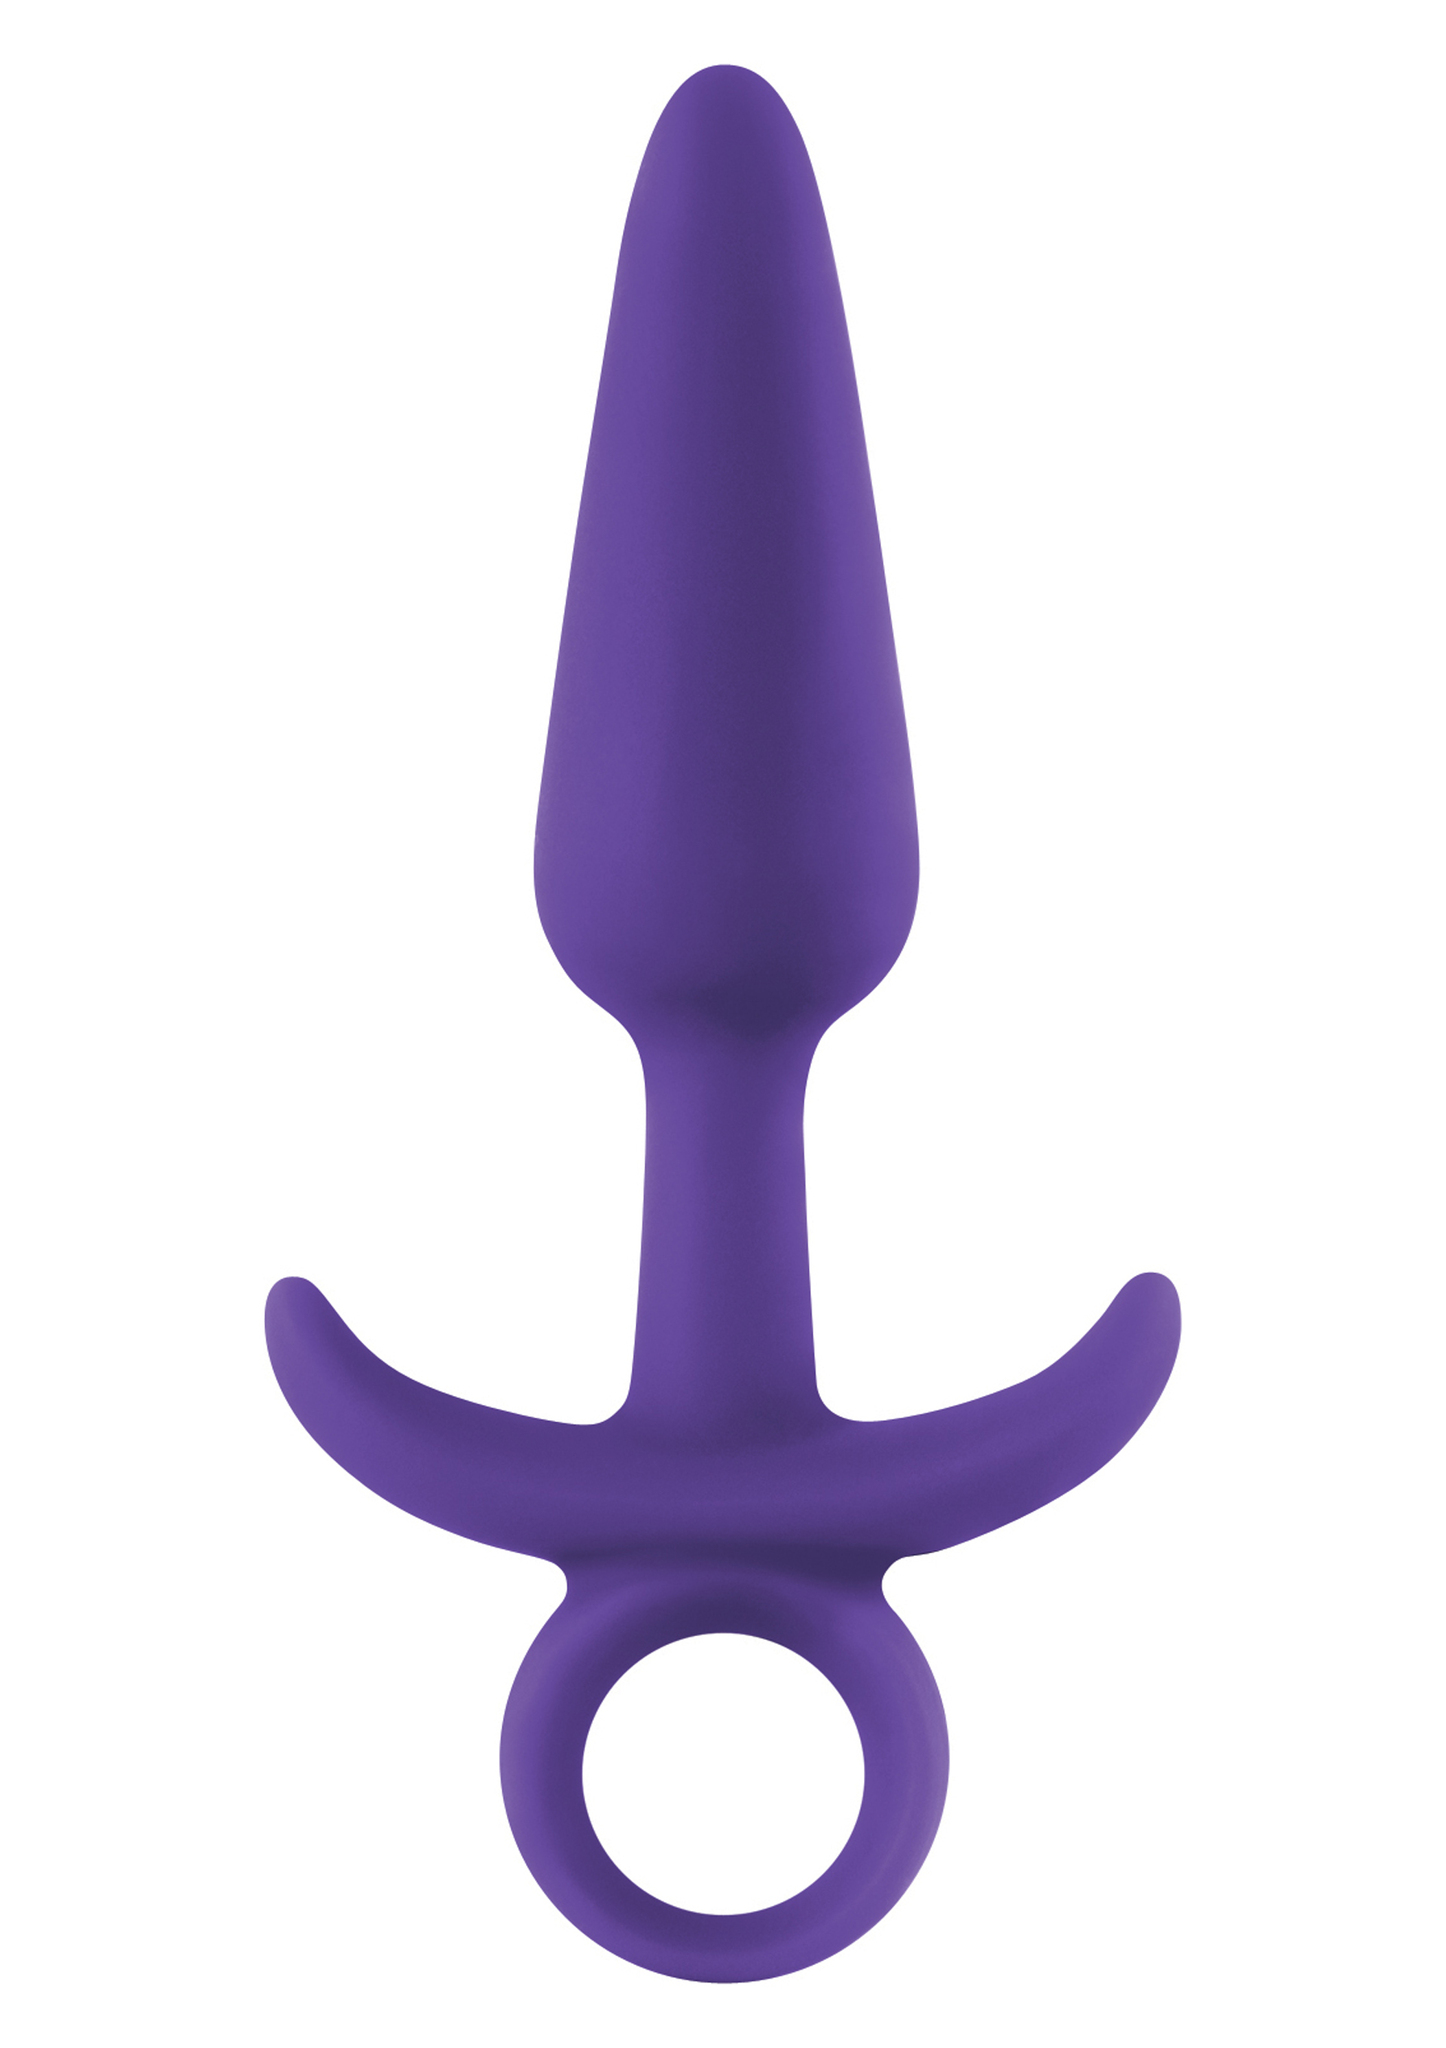 Inya - Prince, medium purple